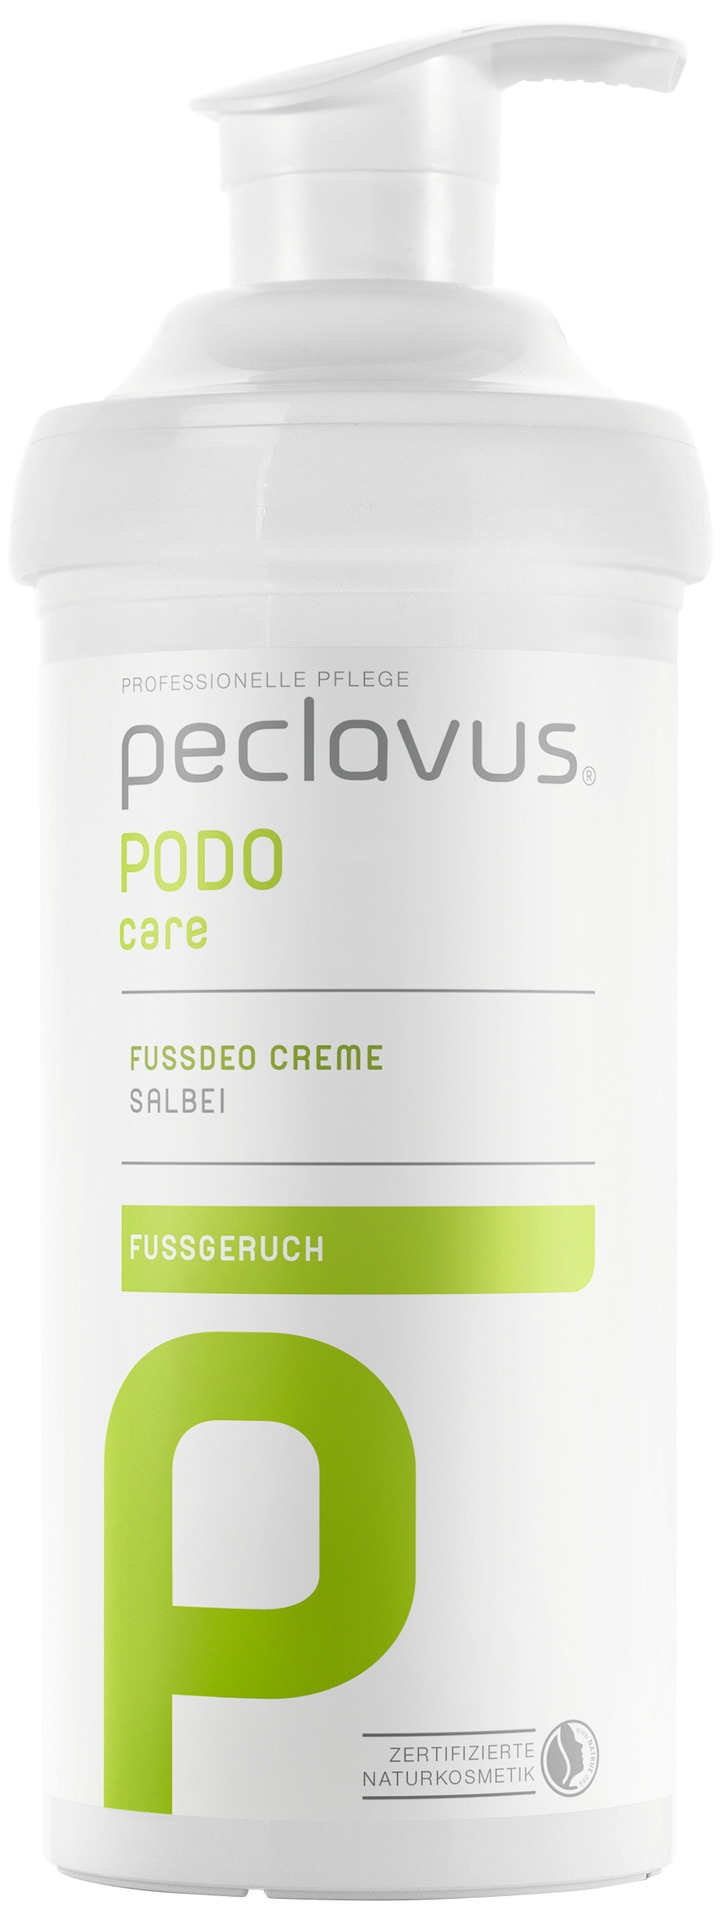 Peclavus PODOcare Fußdeo Creme | 500 ml